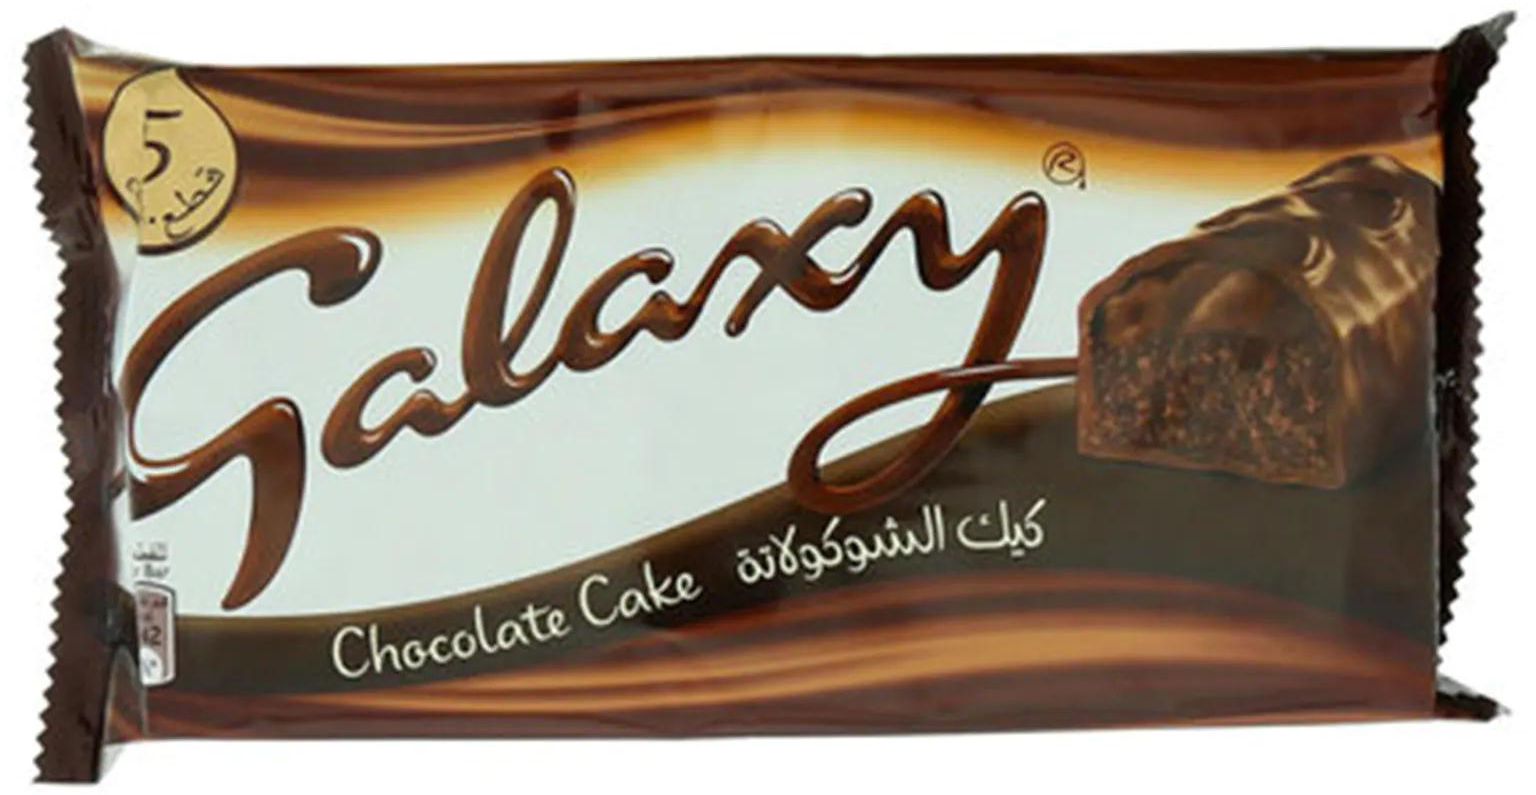 Galaxy chocolate cake 30 g x 5